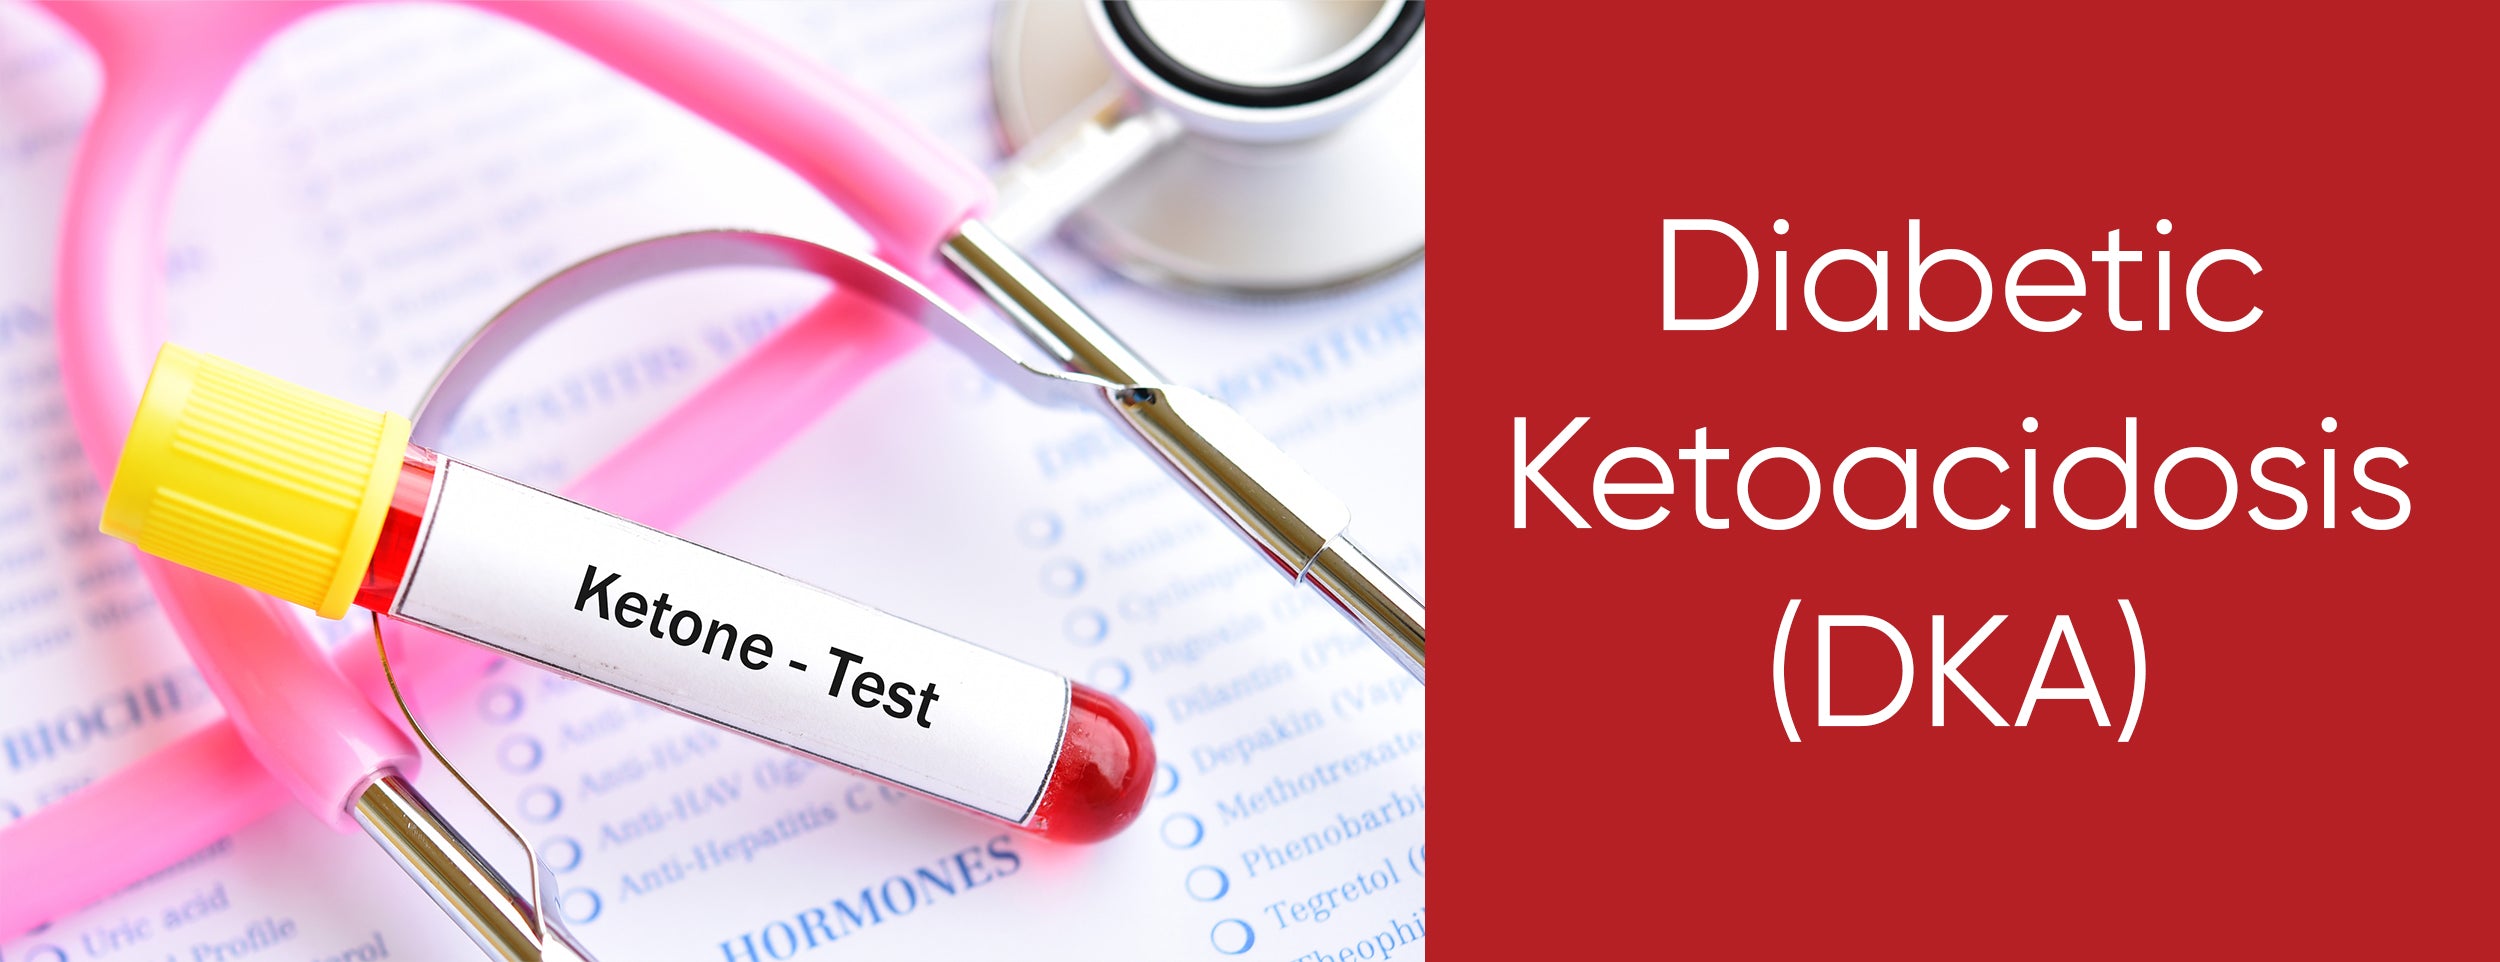 Diabetes Ketoacidosis (DKA) after missing an insulin shot